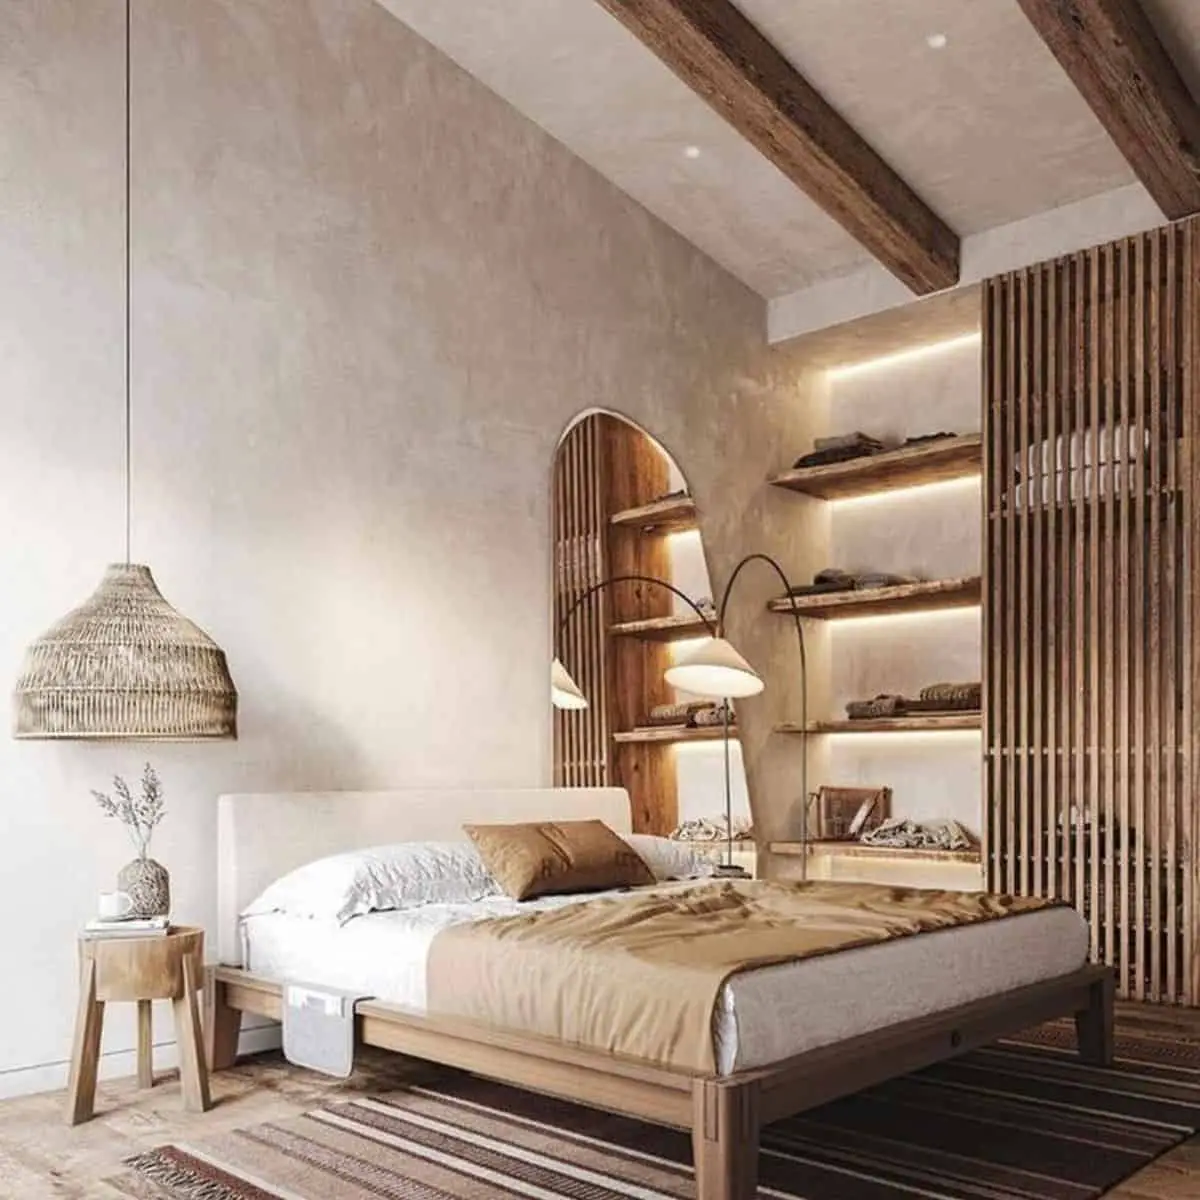 Wabi sabi bedroom ideas Natural textures on rugs, wooden furniture